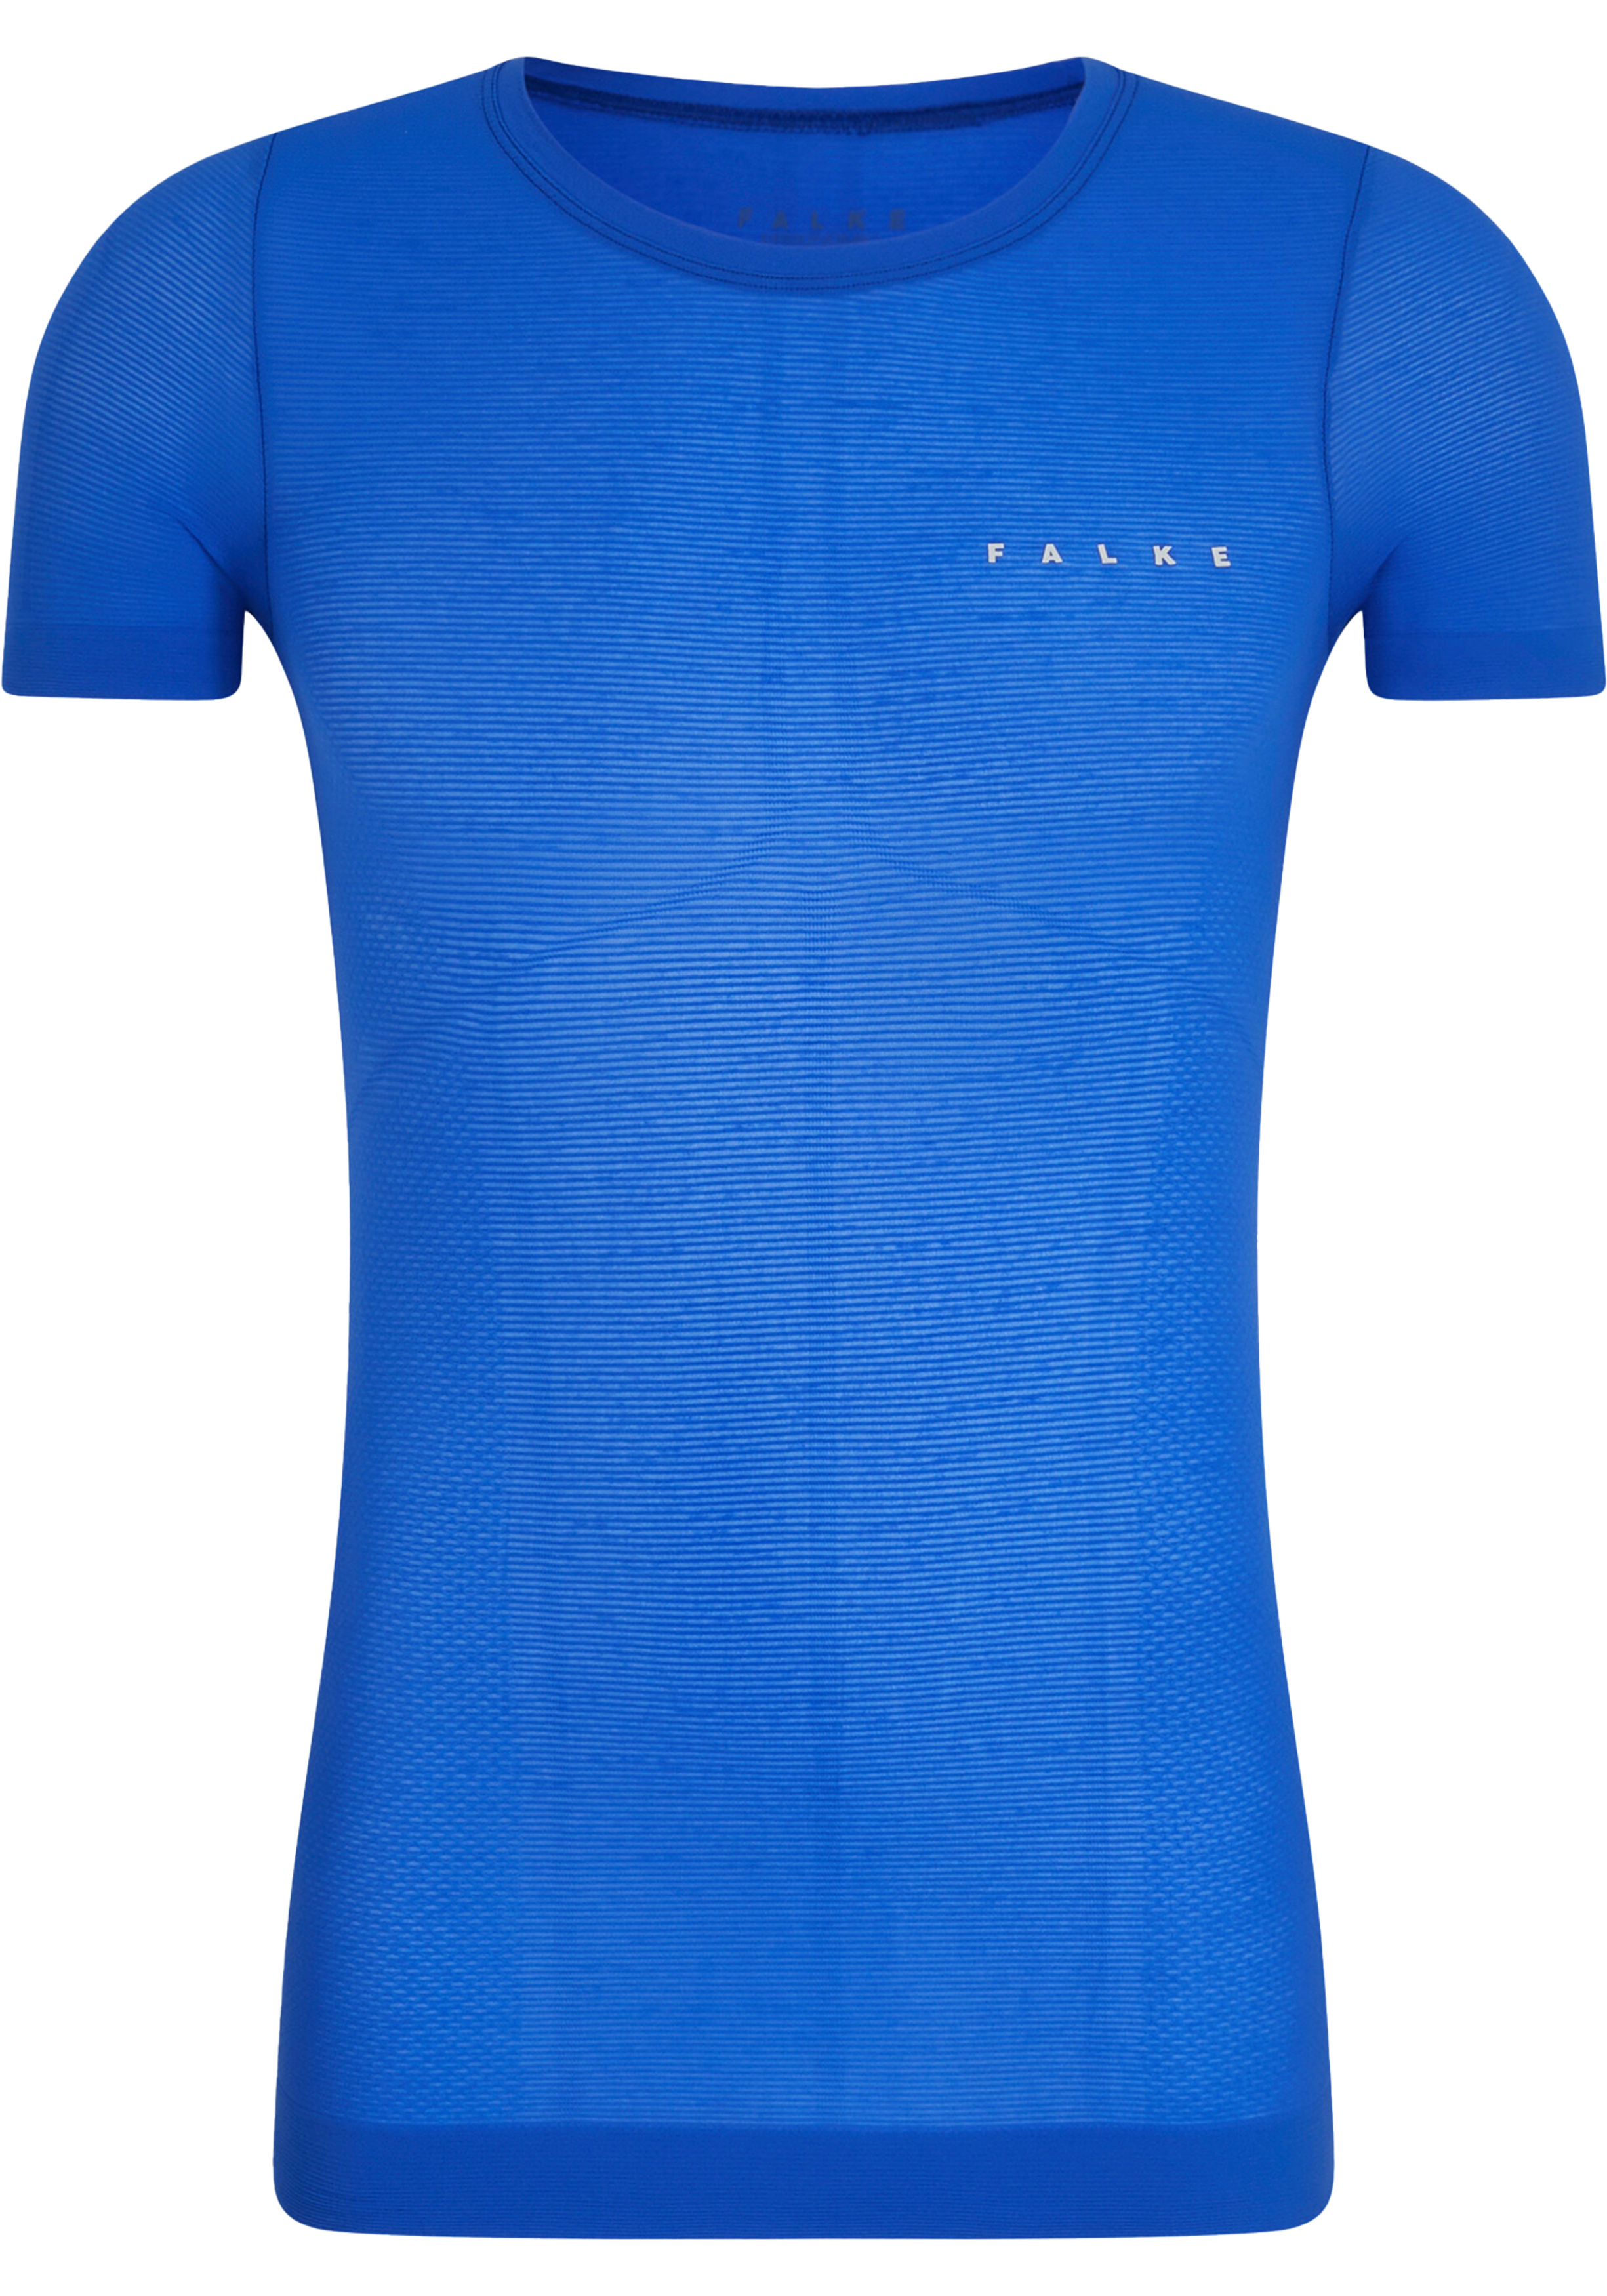 FALKE heren T-shirt Ultralight Cool, thermoshirt, blauw (yve)